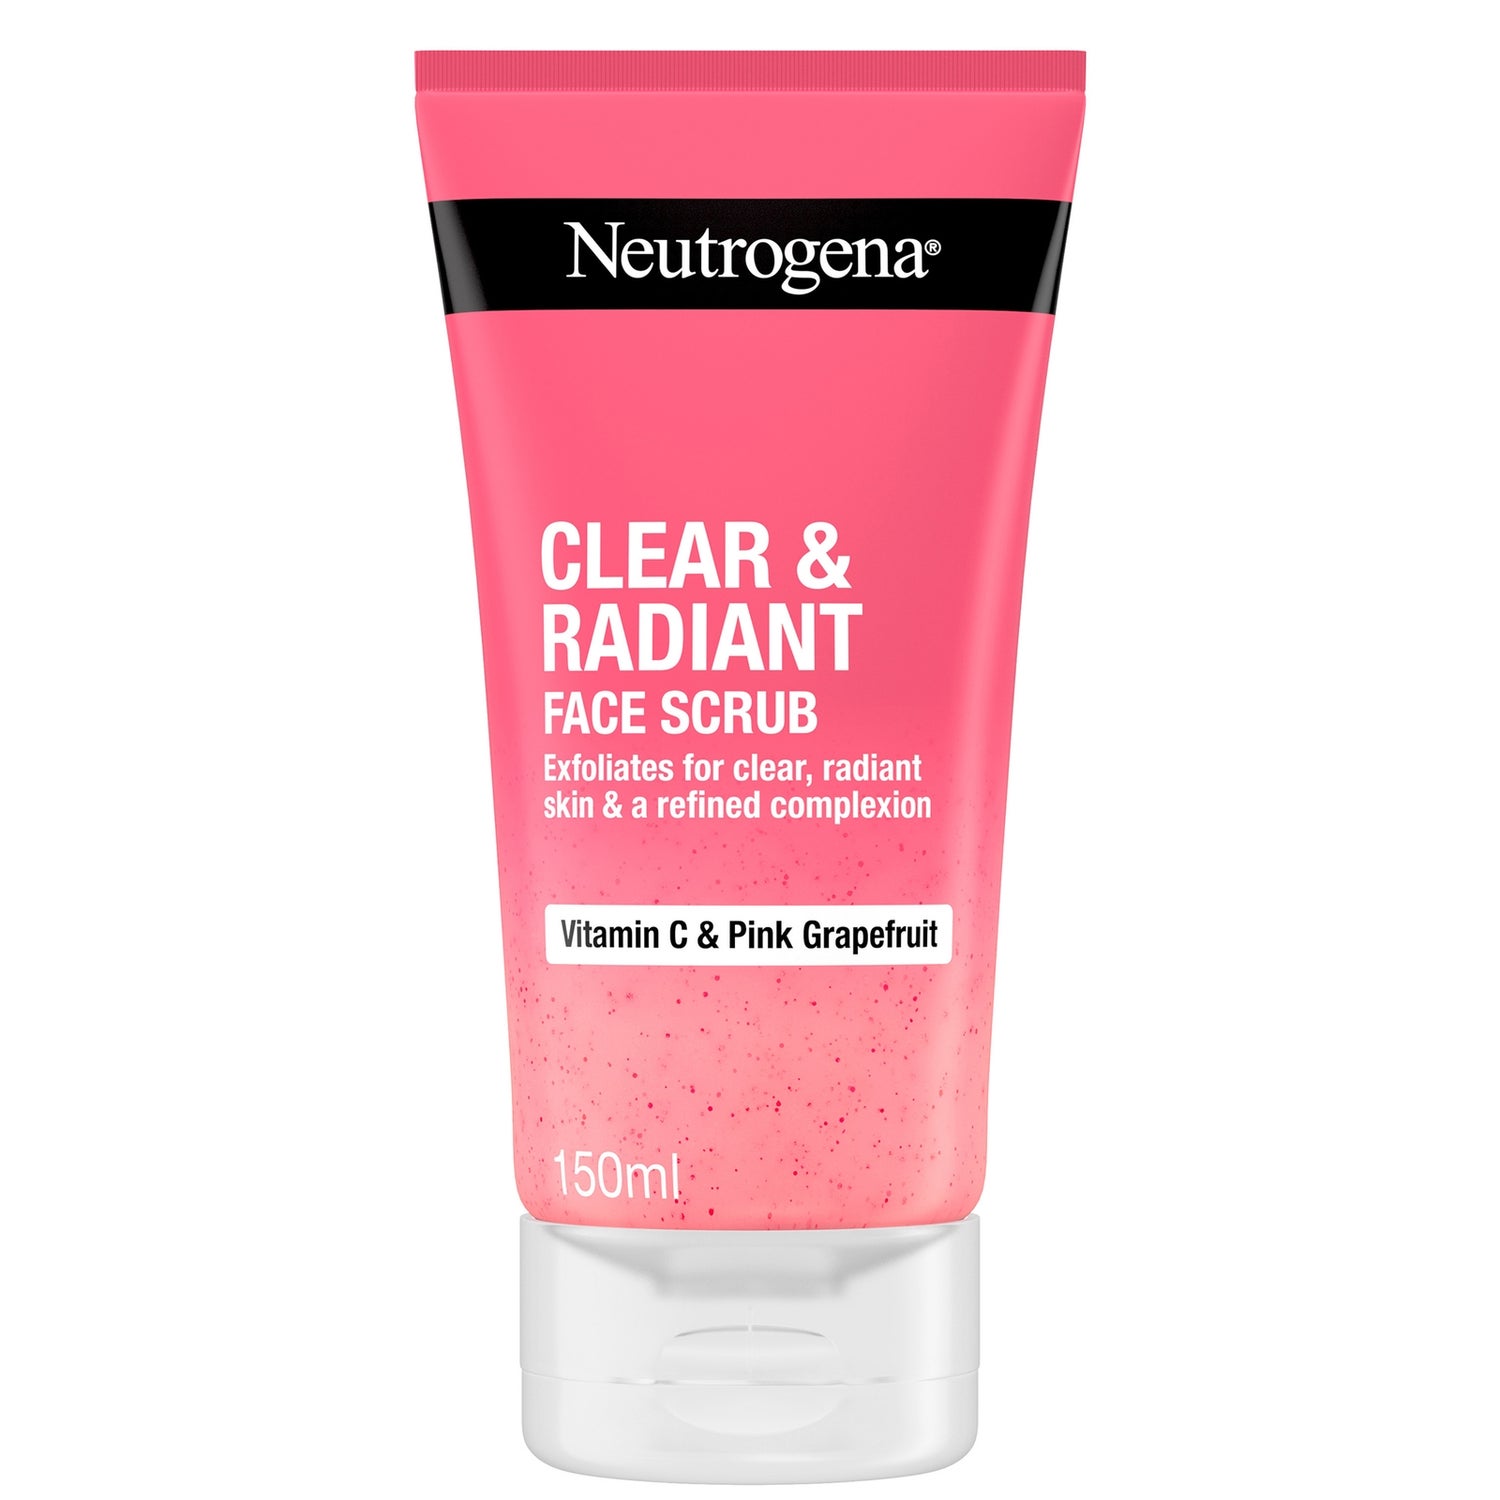 Neutrogena Clear and Radiant Face Scrub 150ml